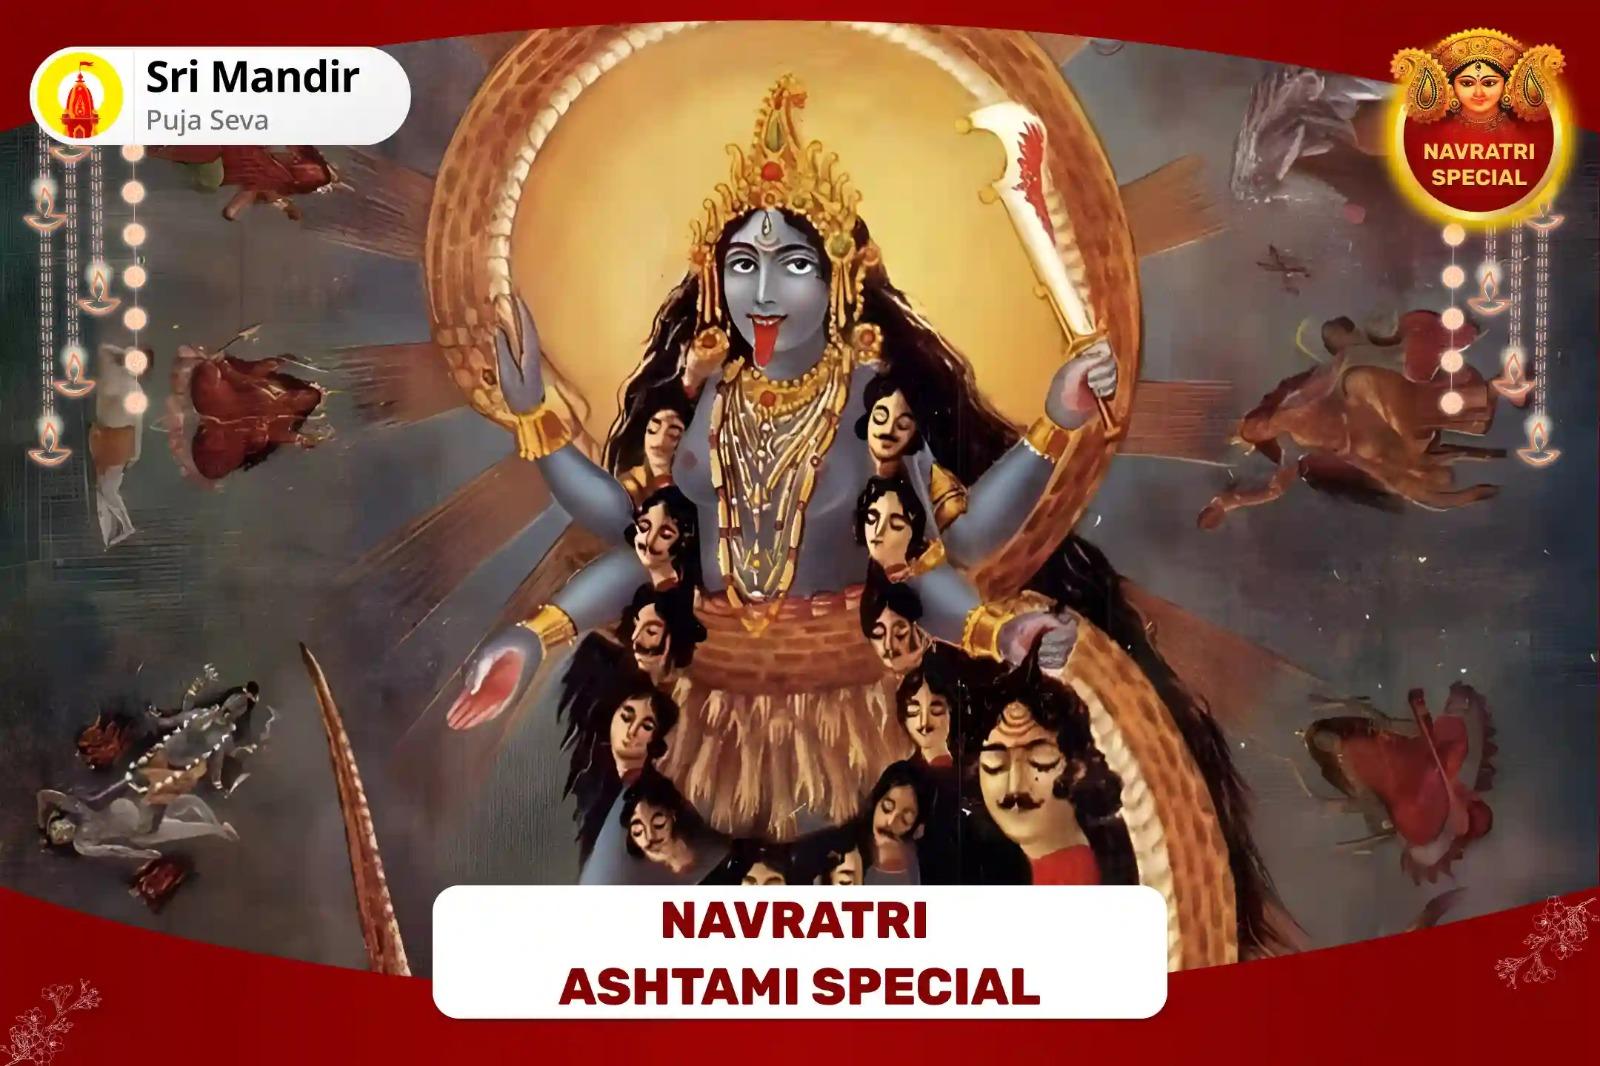 Navratri Ashtami Special Maa Mahakali Maha Yagya for Fearlessness and Powerful Suppression of Adversaries